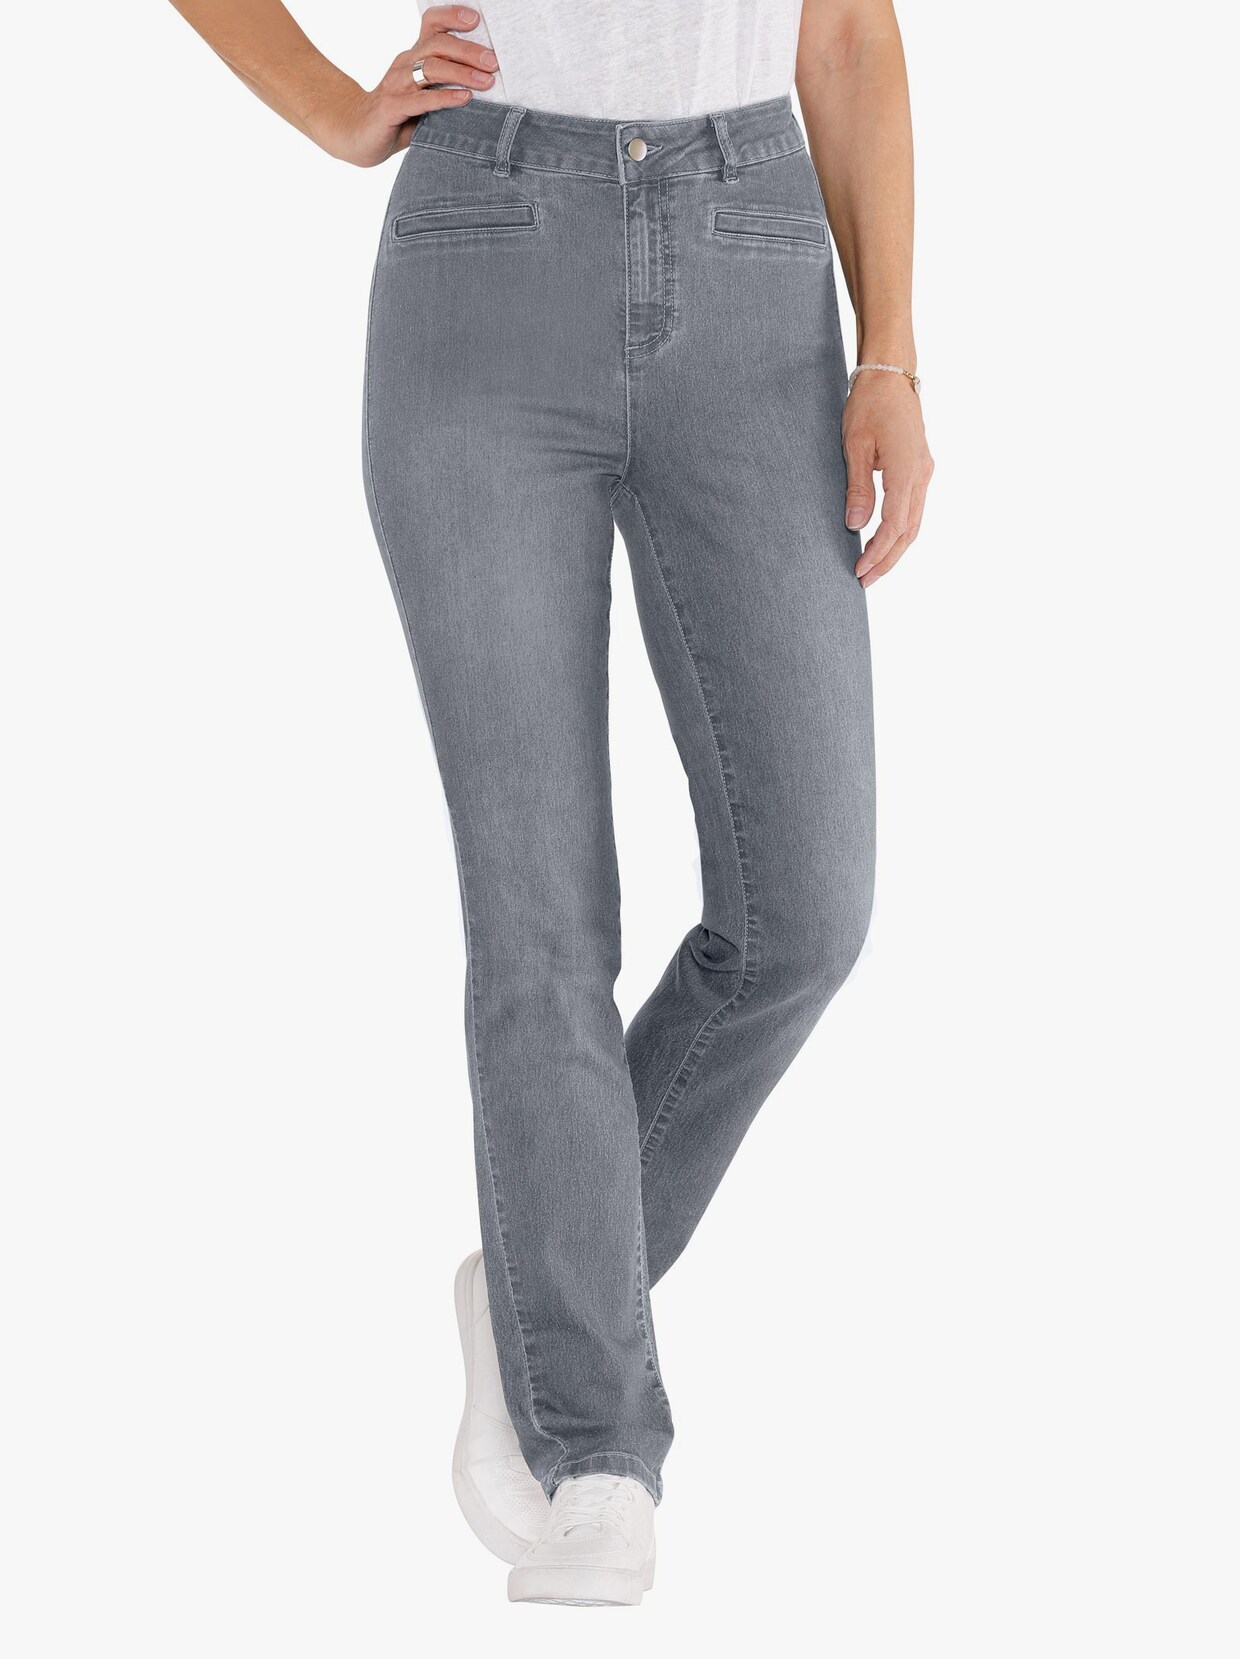 jeans - grey-denim